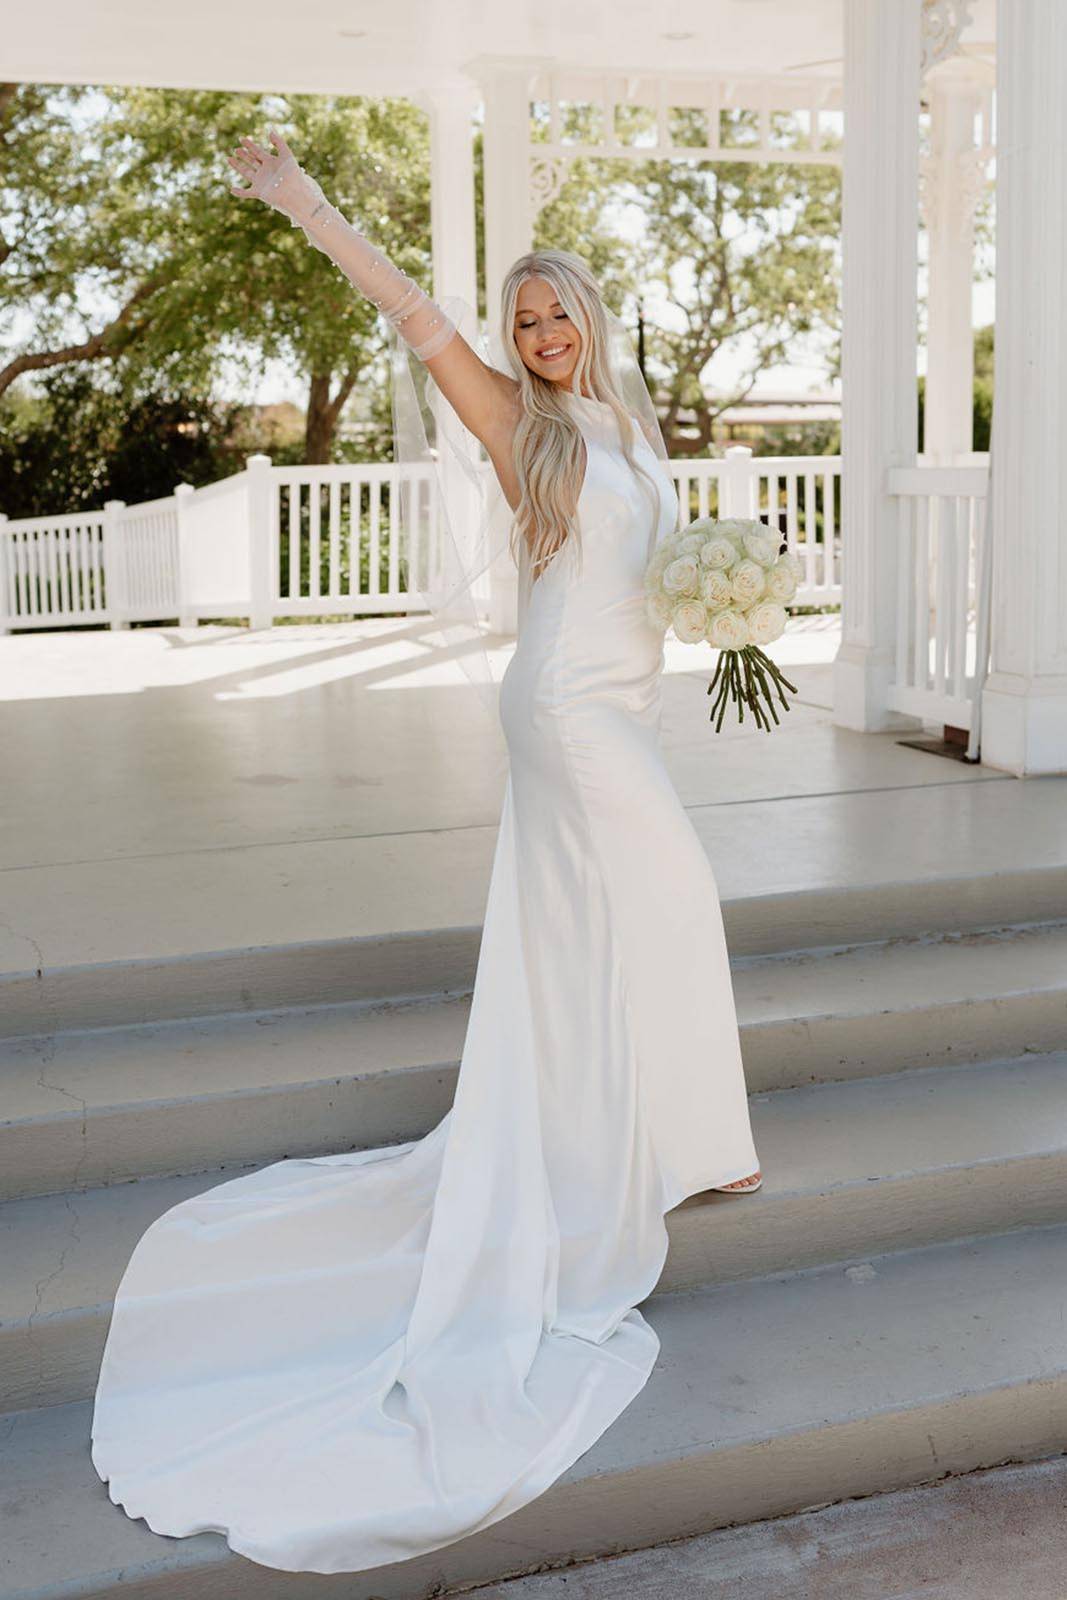 Bride, joyfully showing her wedding dress 